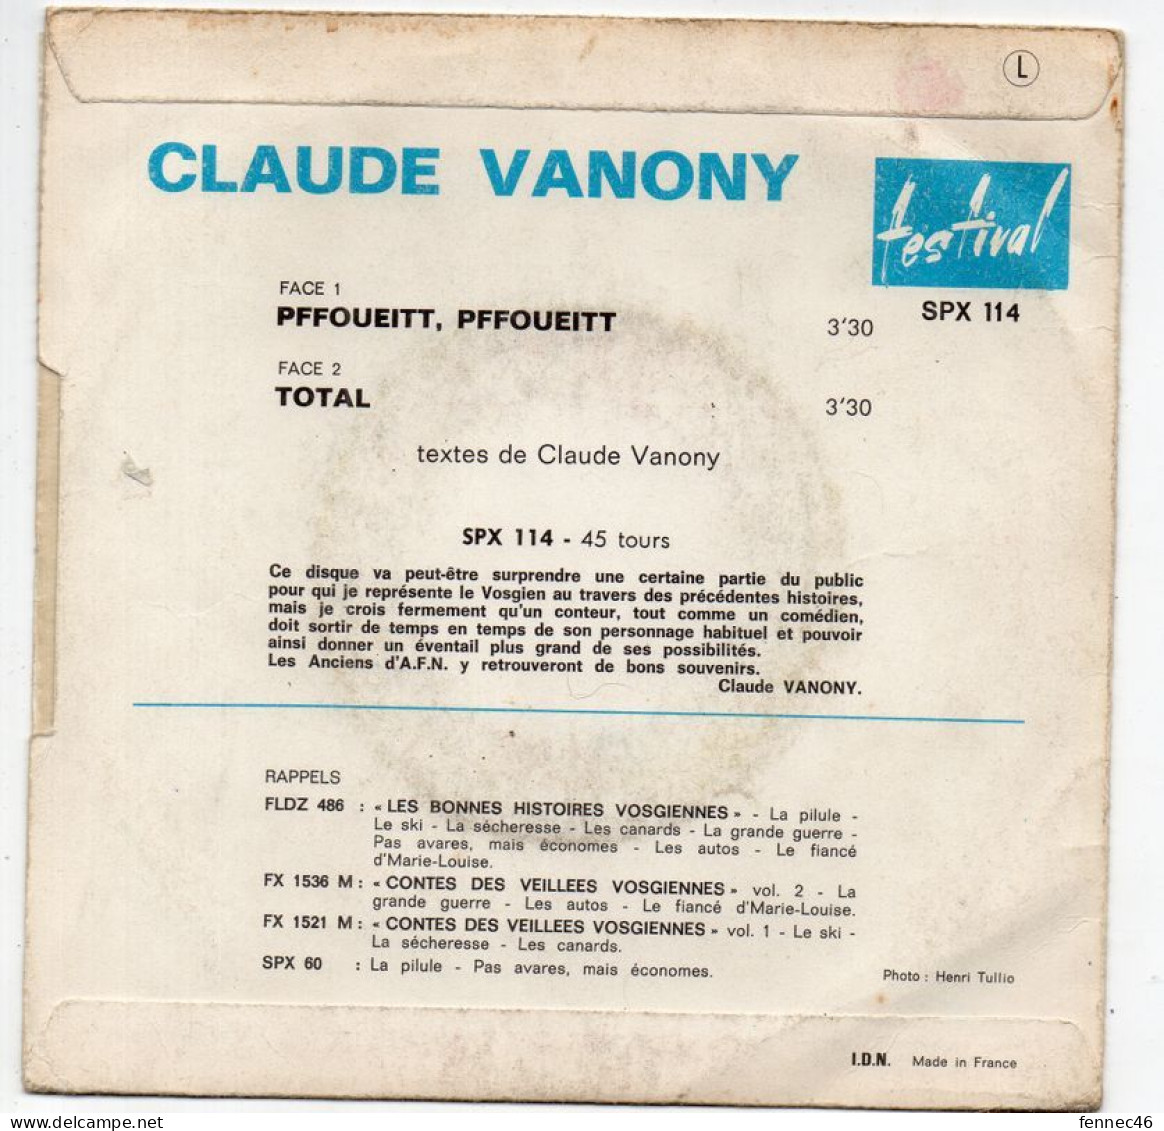 Vinyle  45T - Claude Vanony Raconte - Pffoueitt, Pffoueitt - Total - Comiques, Cabaret